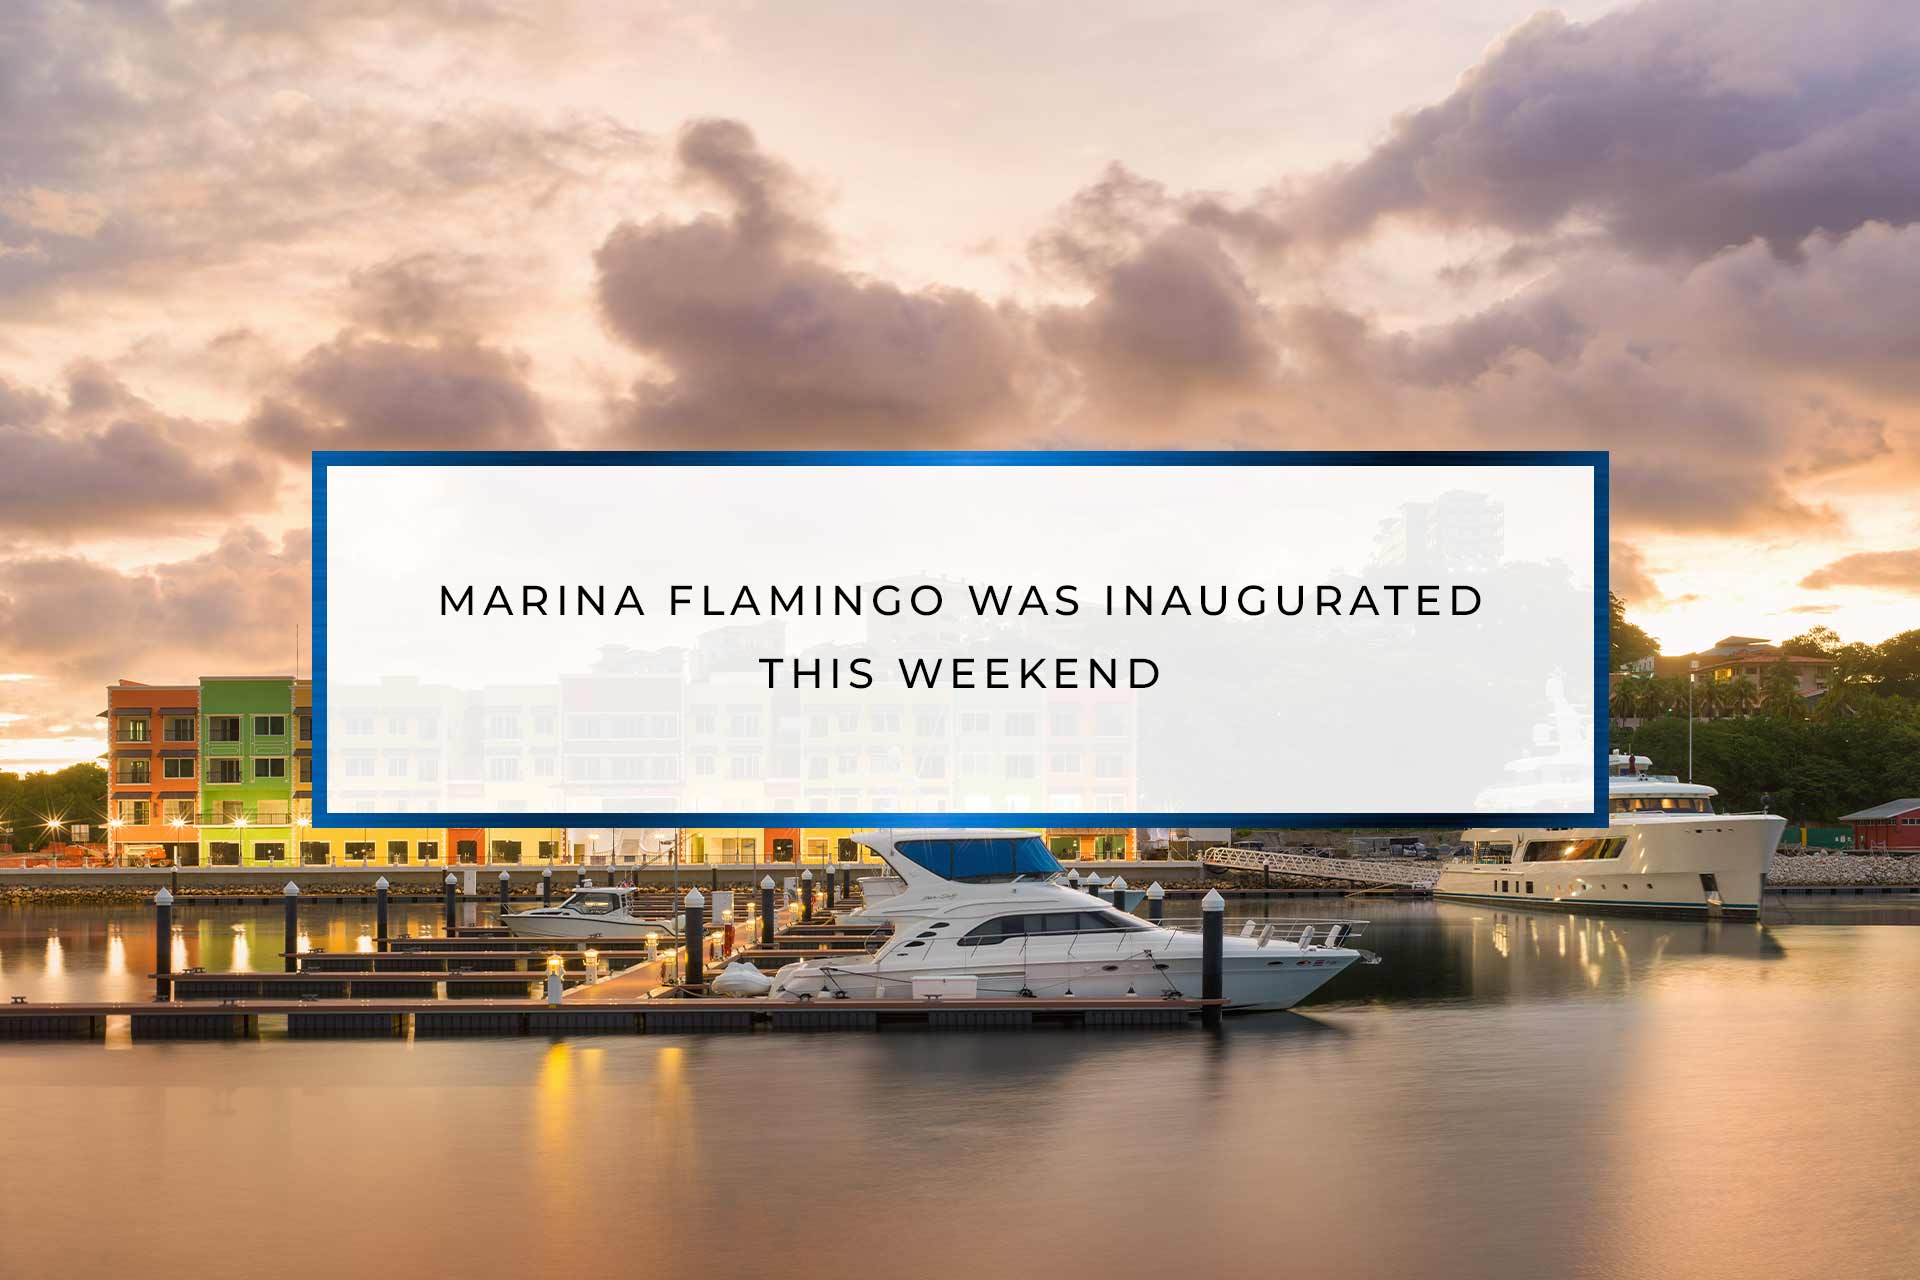 Marina Flamingo was inaugurated this weekend